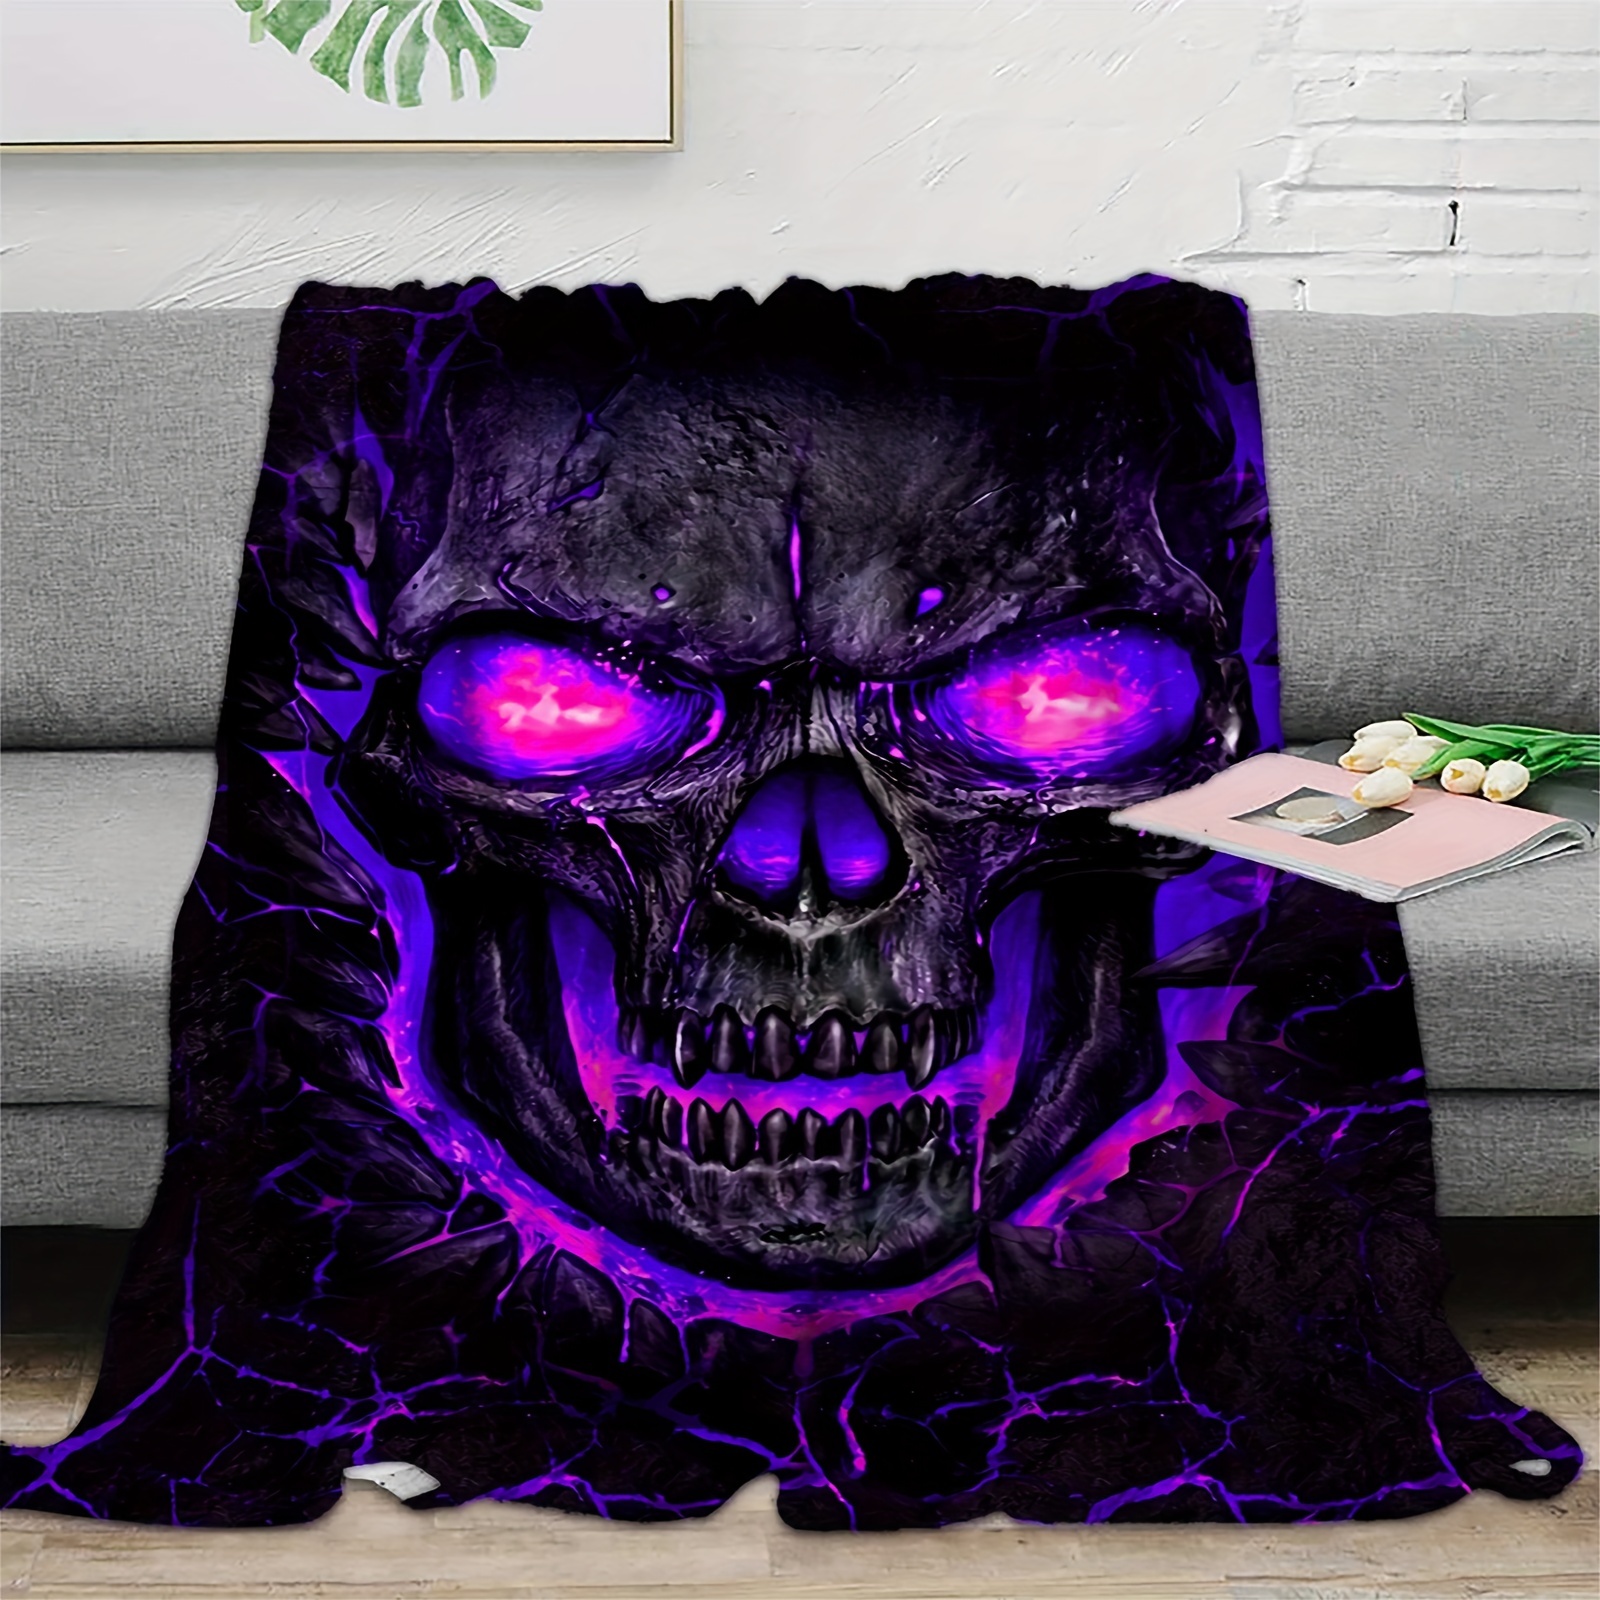  LUVIVIHOME Purple Fire Skull Throw Blanket, Flame Skeleton  Halloween Goth Gothic Blanket, Black Blanket, Cozy Warm Soft Lightweight  Fluffy Fuzzy Plush Flannel Fleece Blanket for Couch, Sofa, 40x50 : Home 